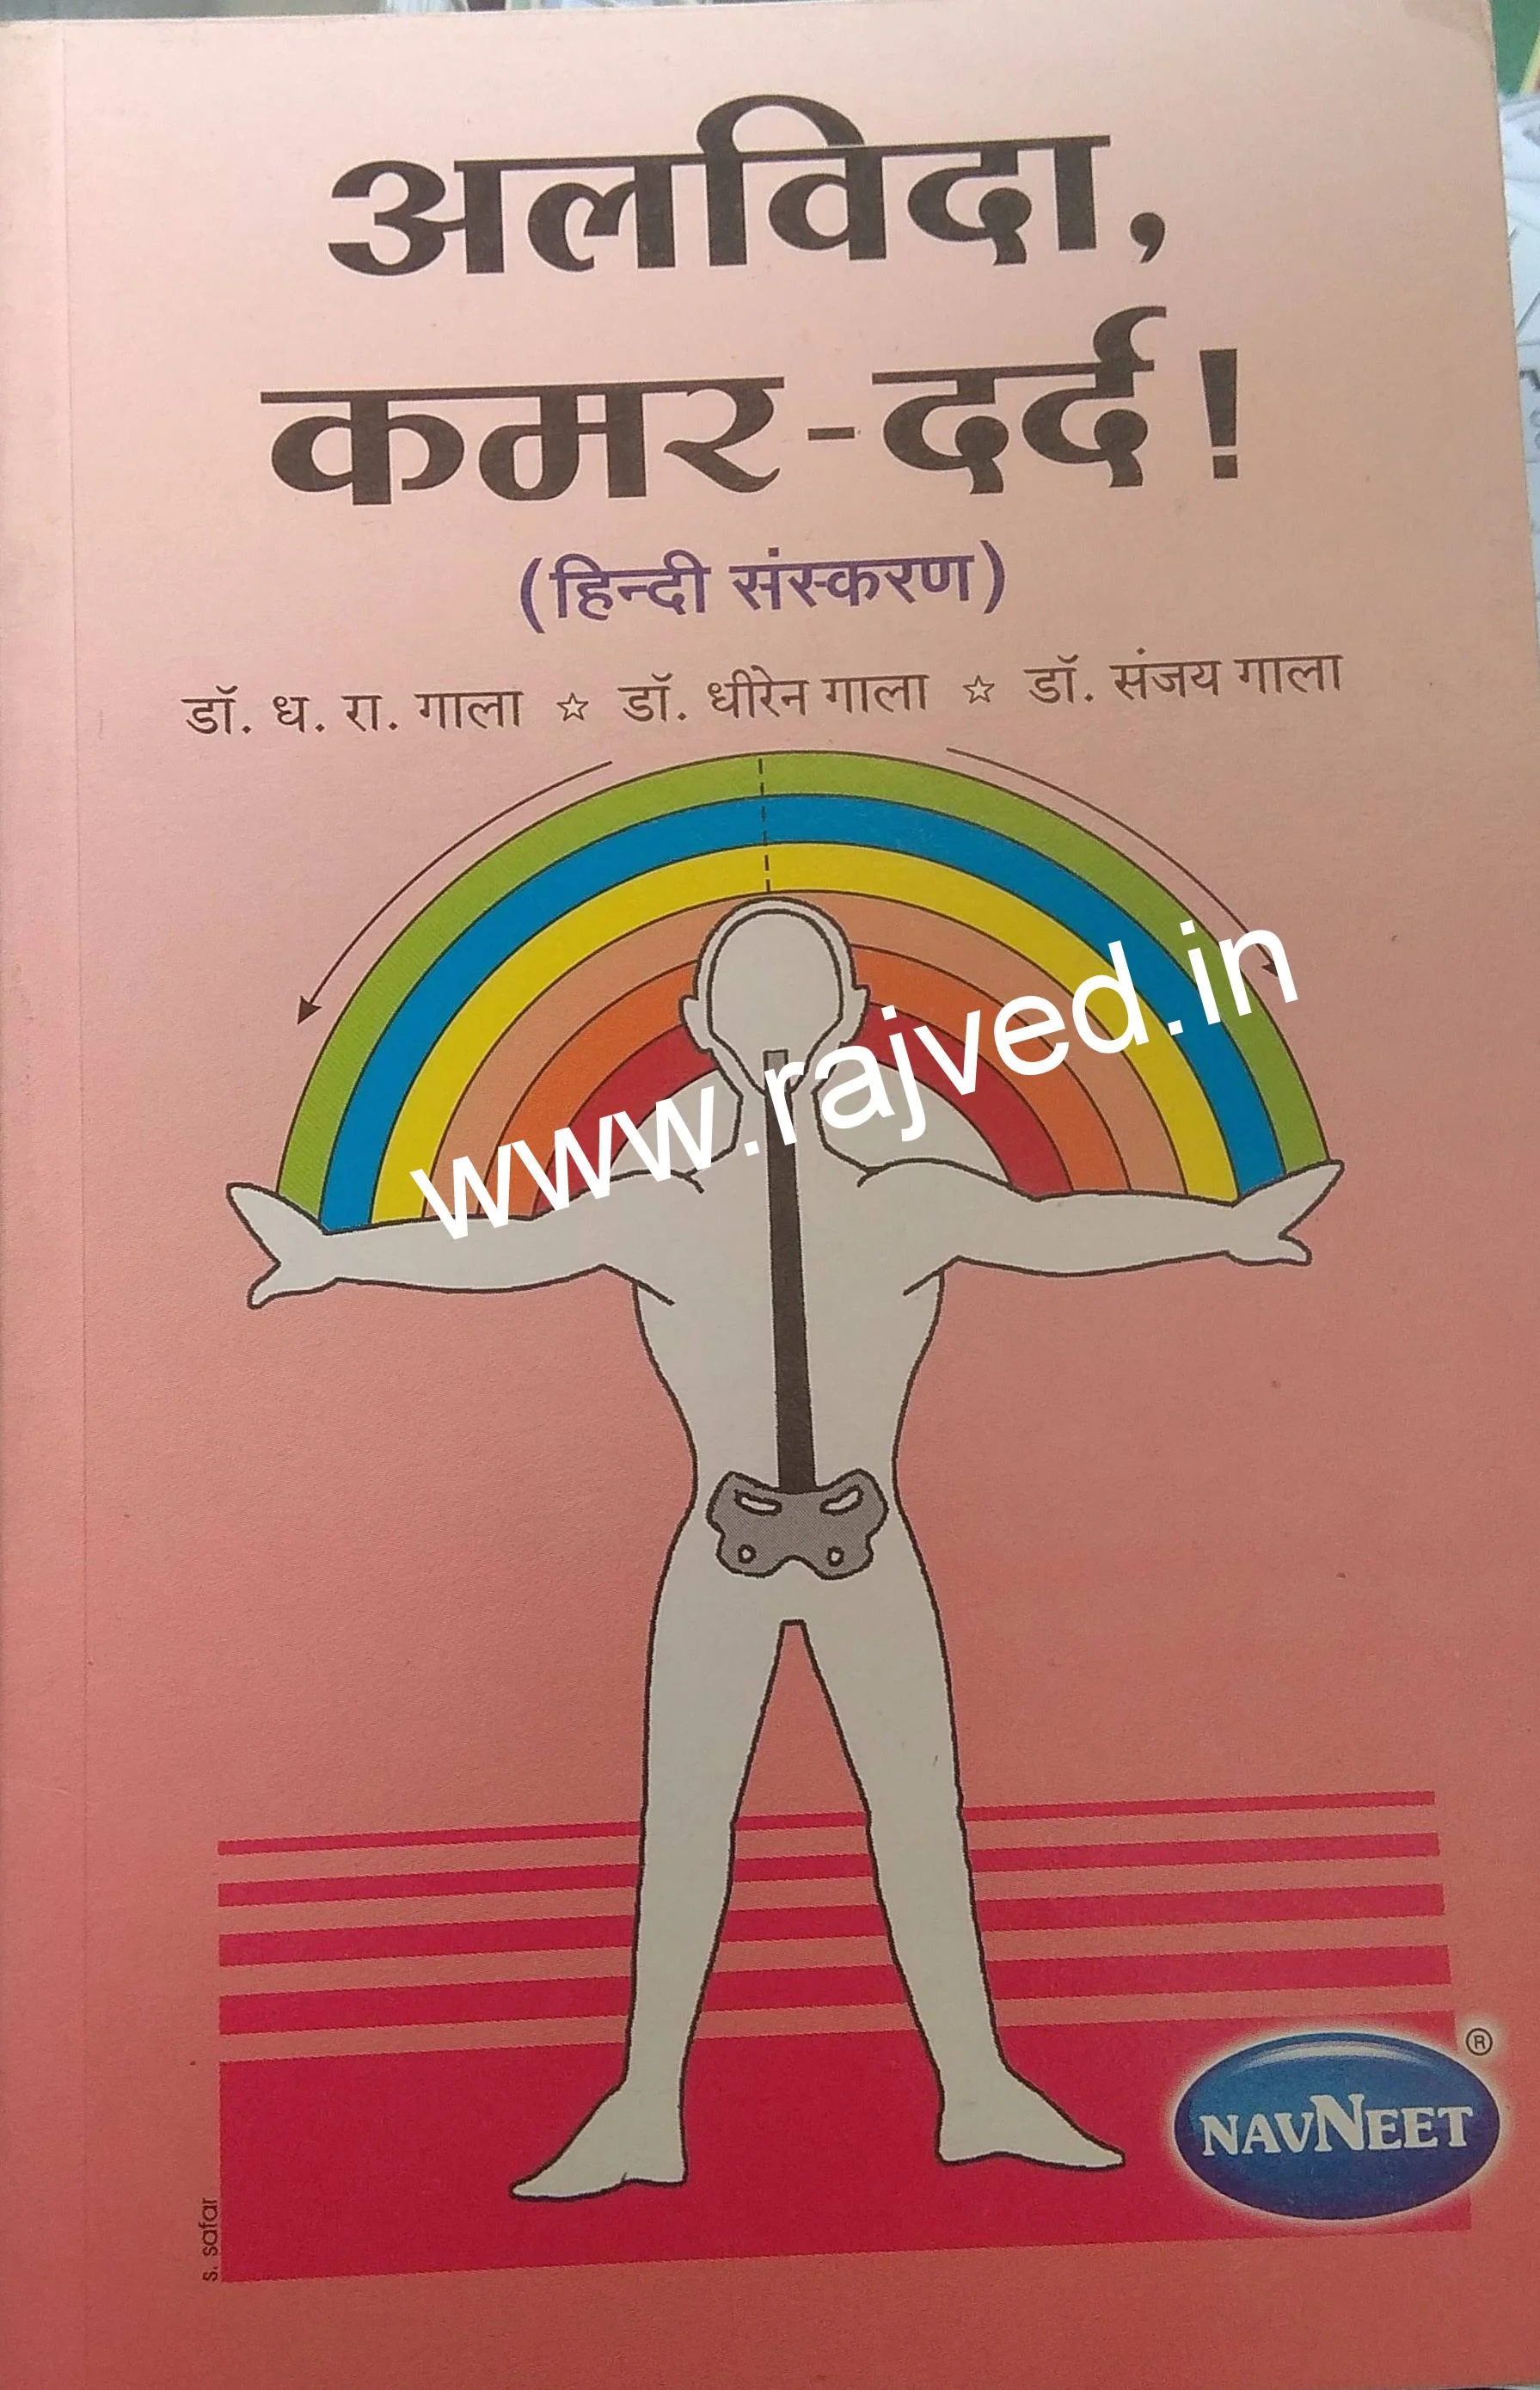 alvida kamar-darda ! hindi language by dr.D.R.gala, Dr.dheeren gala, Dr.sanjay gala, navneet publications